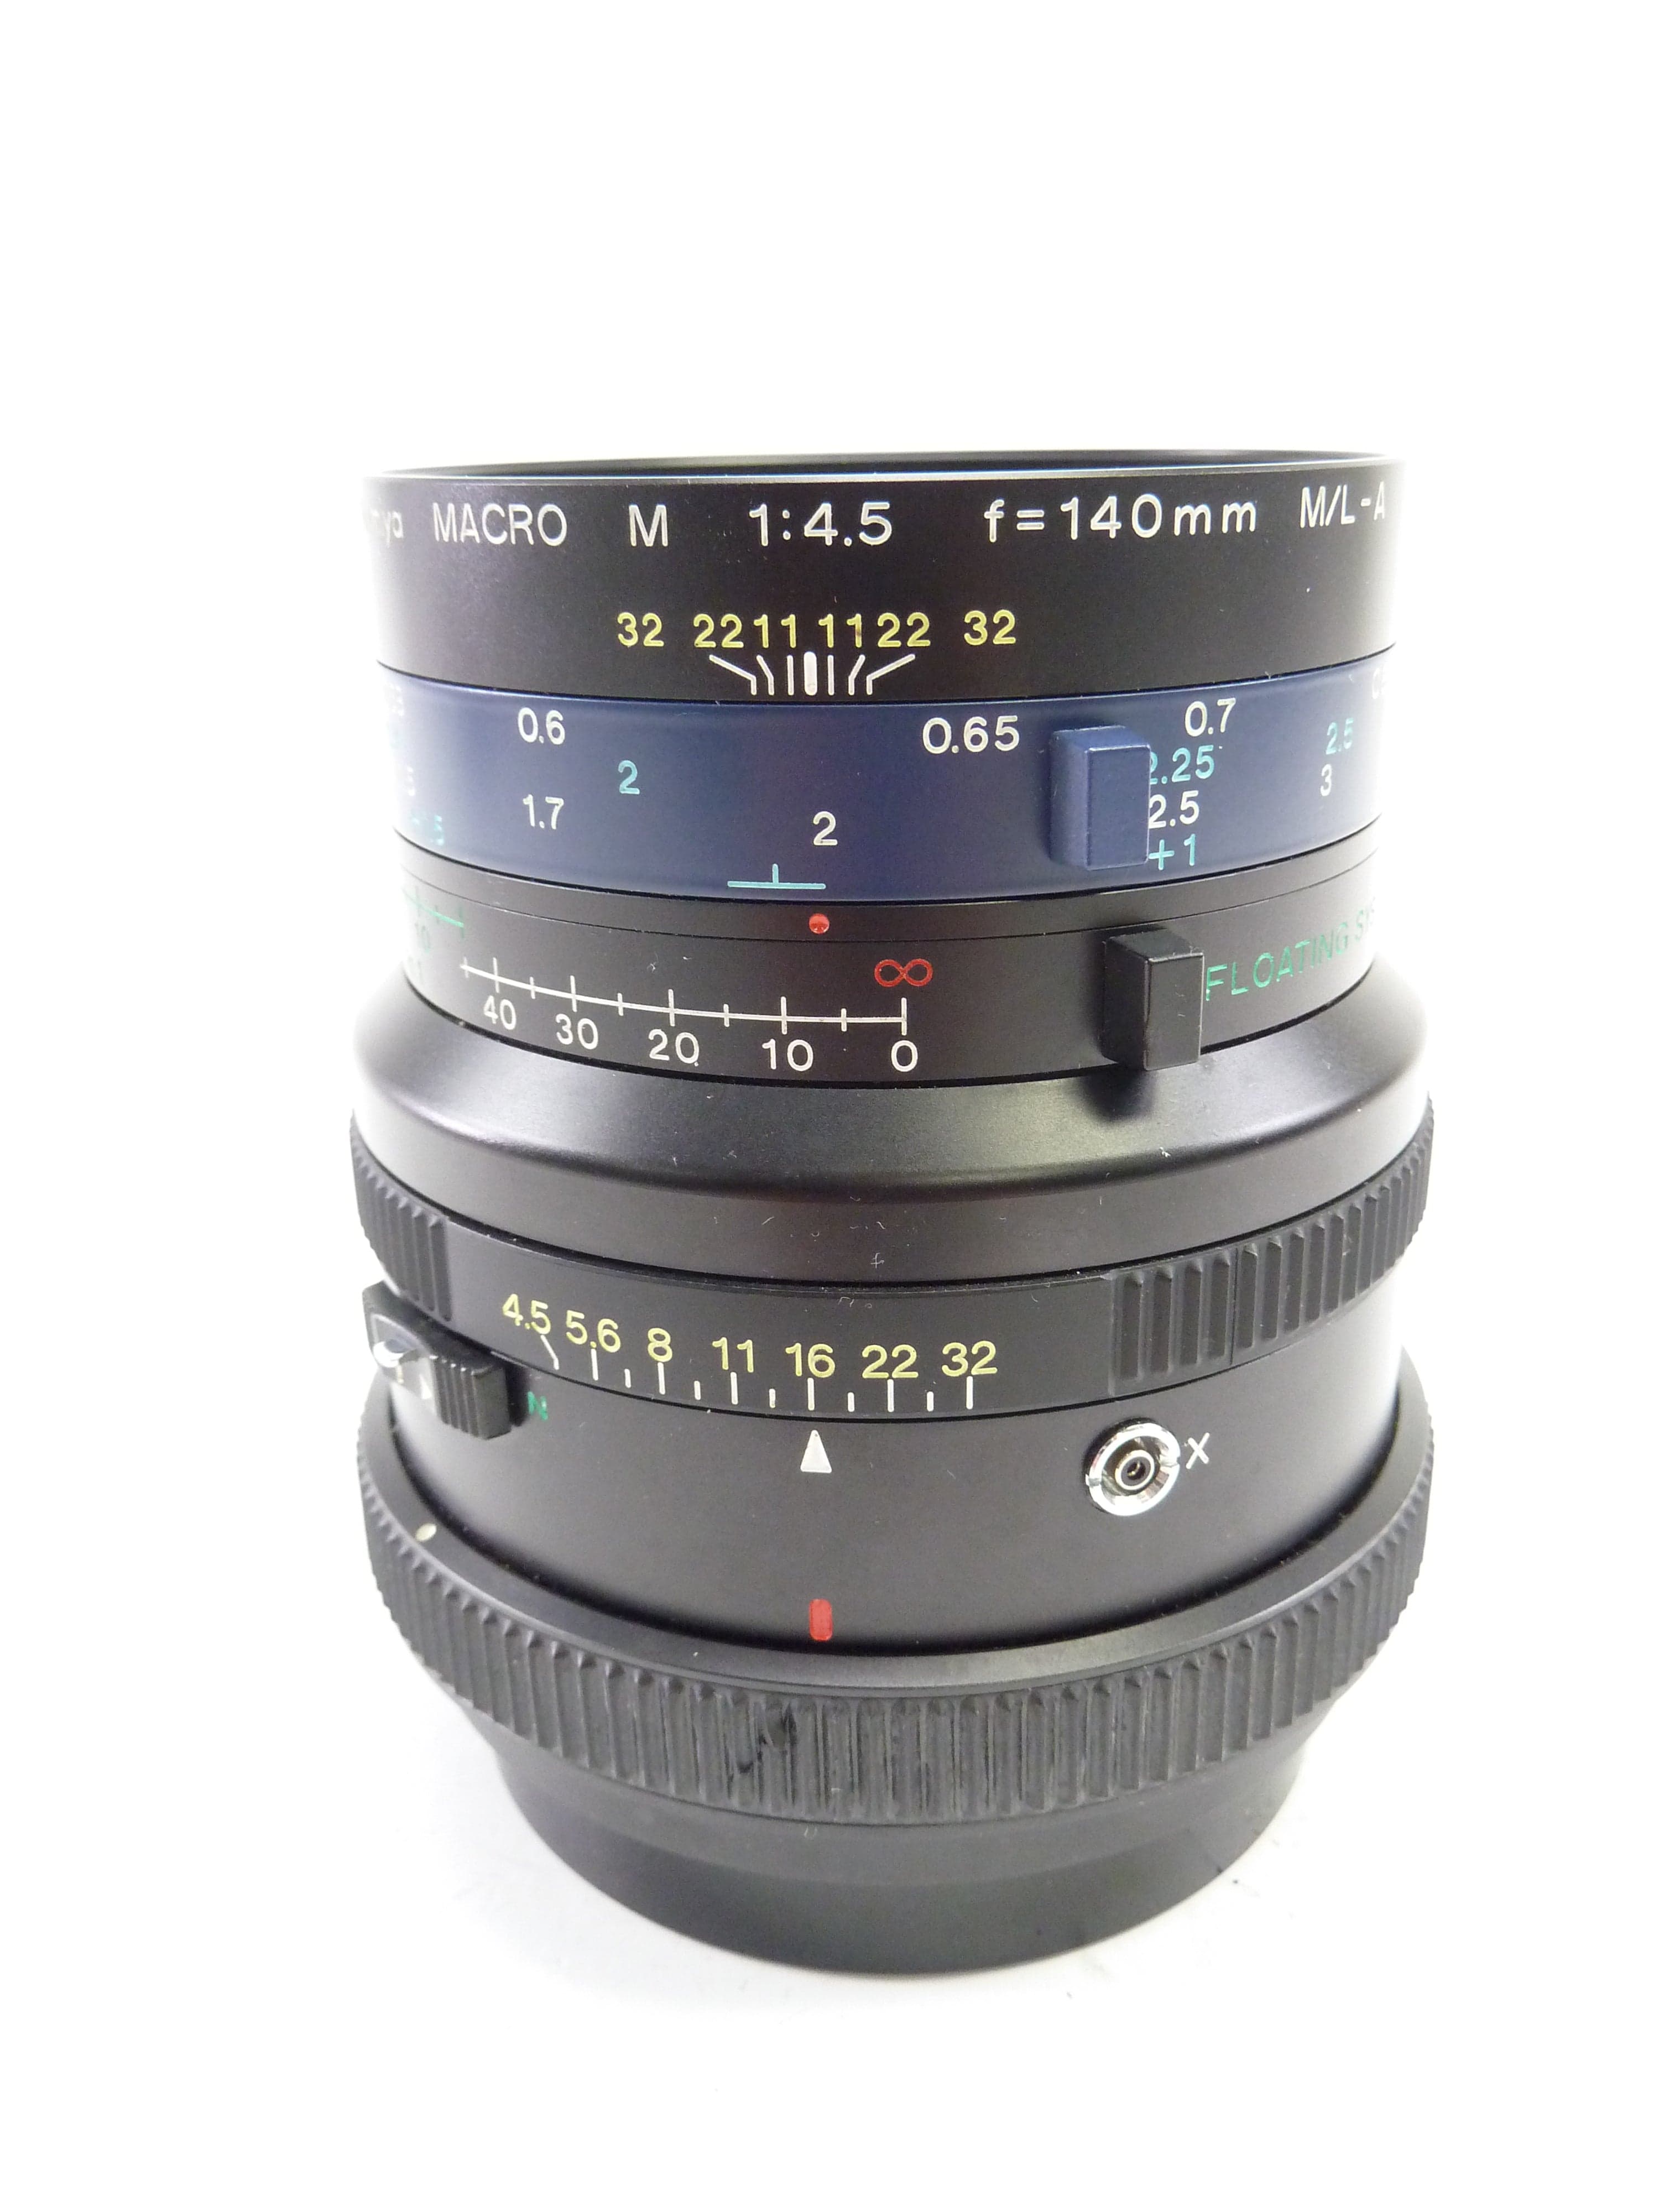 Mamiya RZ M 140MM F4.5 M/L-A Macro Lens – Camera Exchange